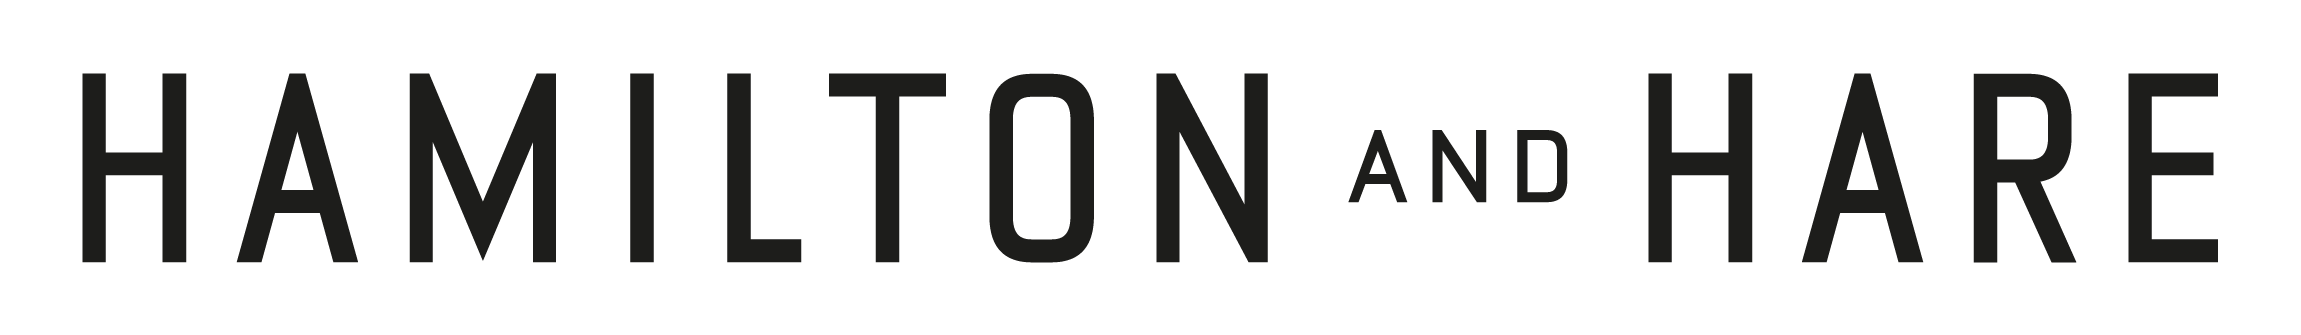 logo-hamilton